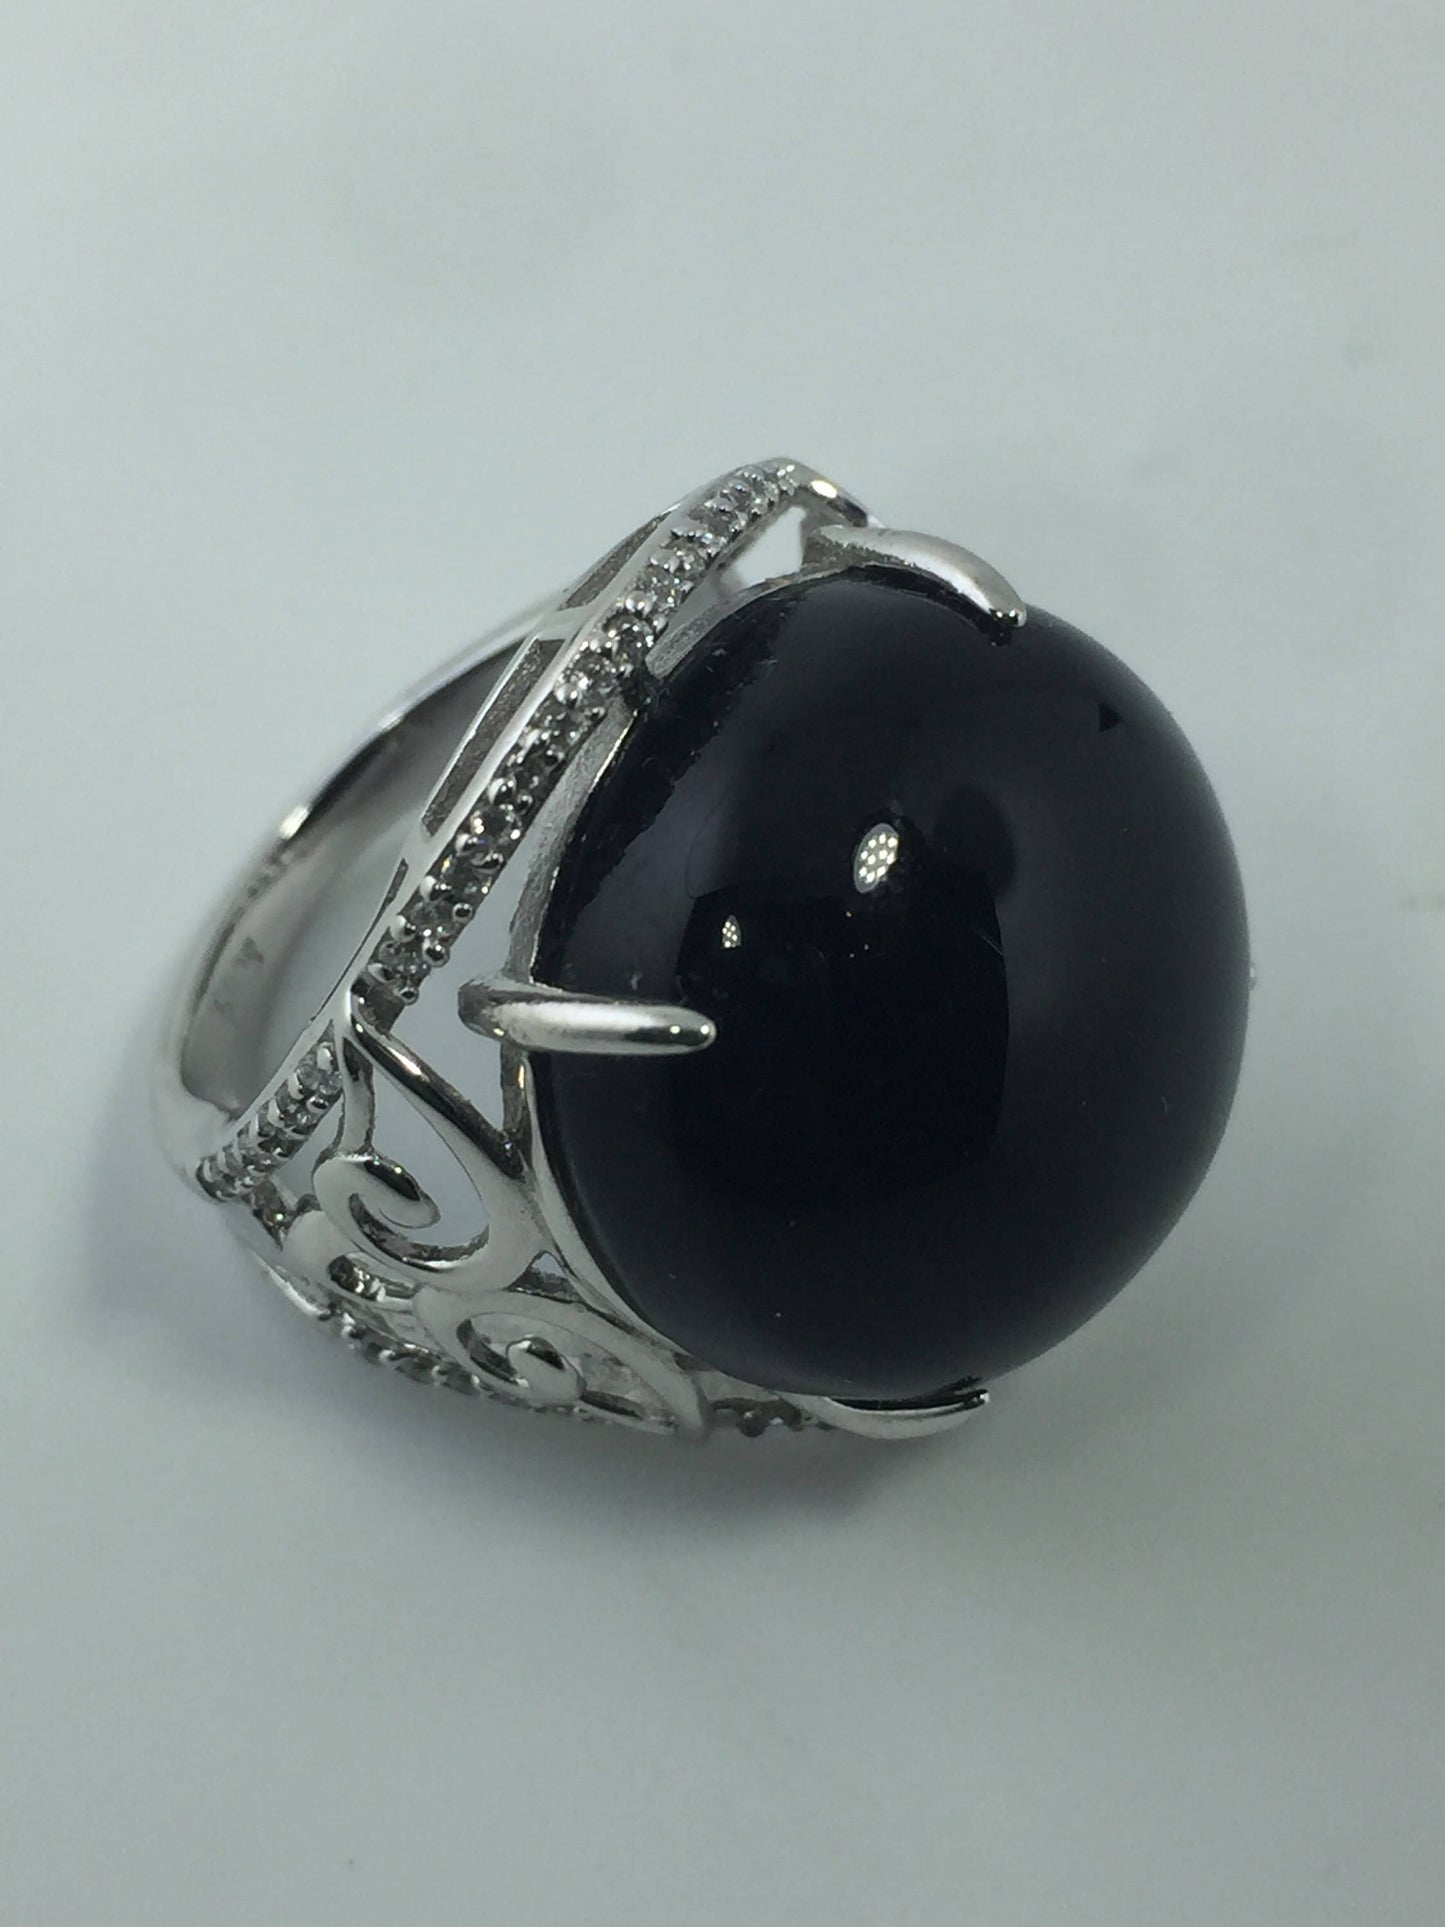 Vintage Genuine Black Onyx 925 Sterling Silver Ring